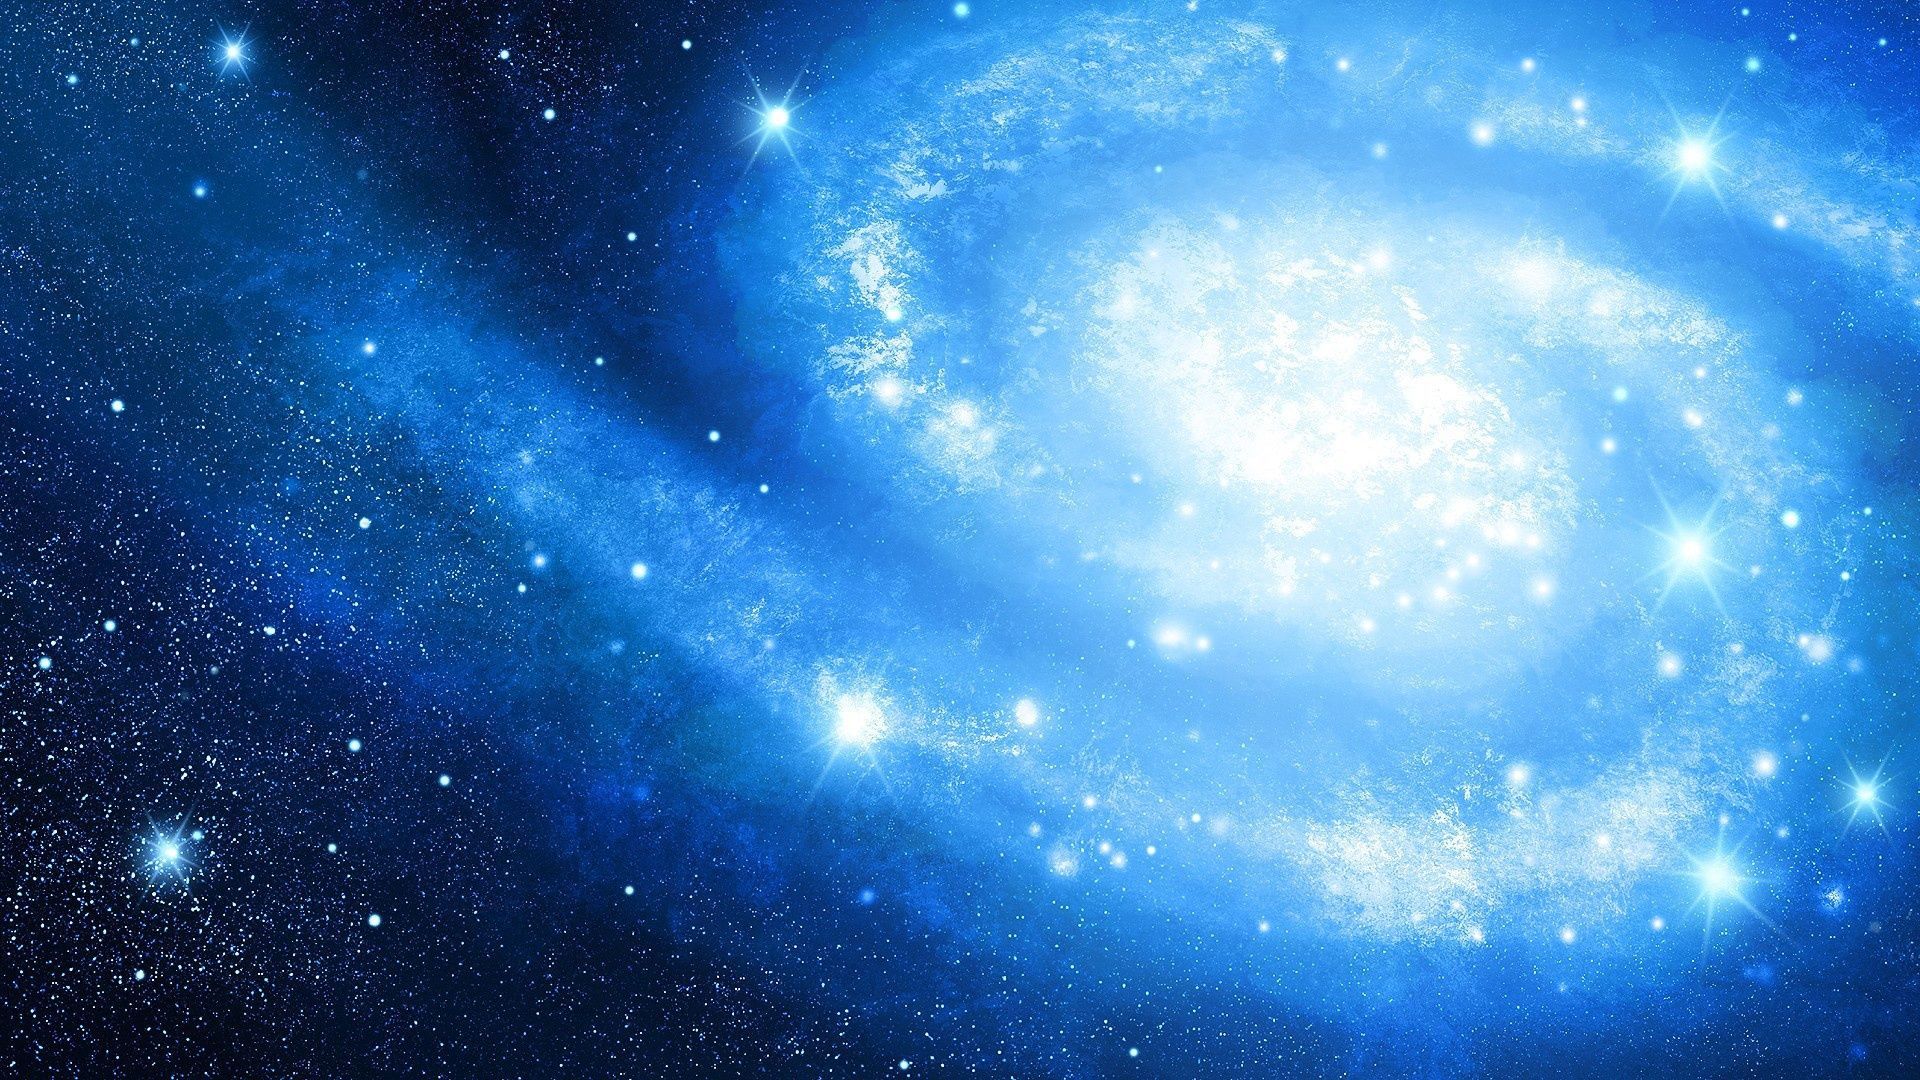 Blue Galaxy Wallpaper Image